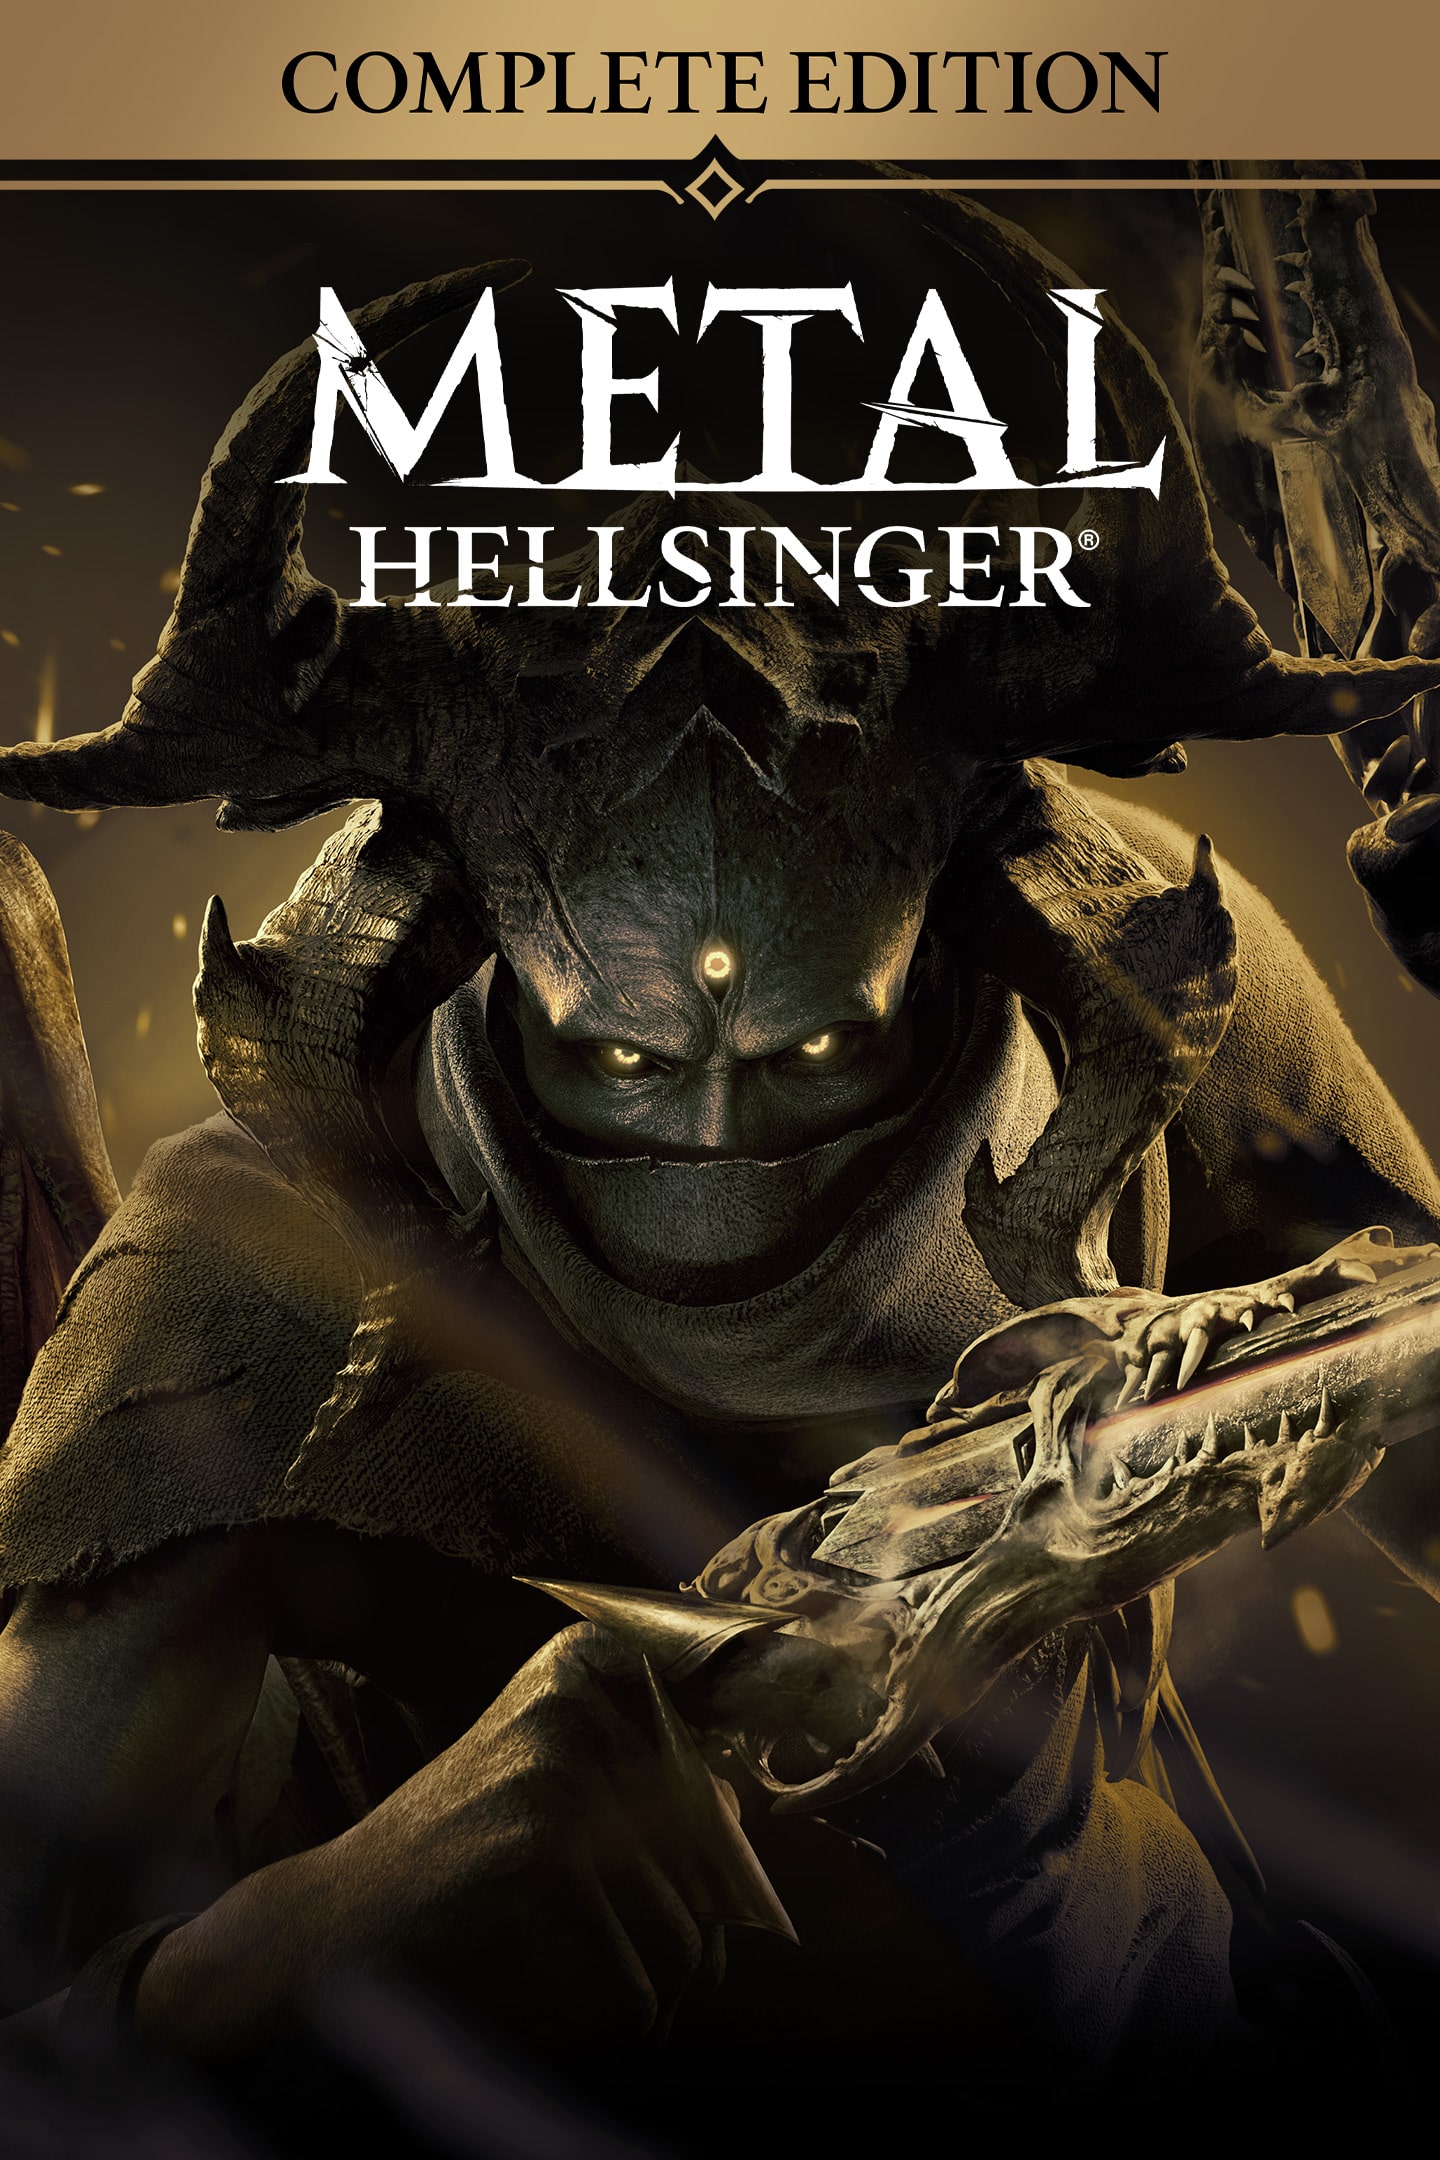 Is Metal Hellsinger On Game Pass?